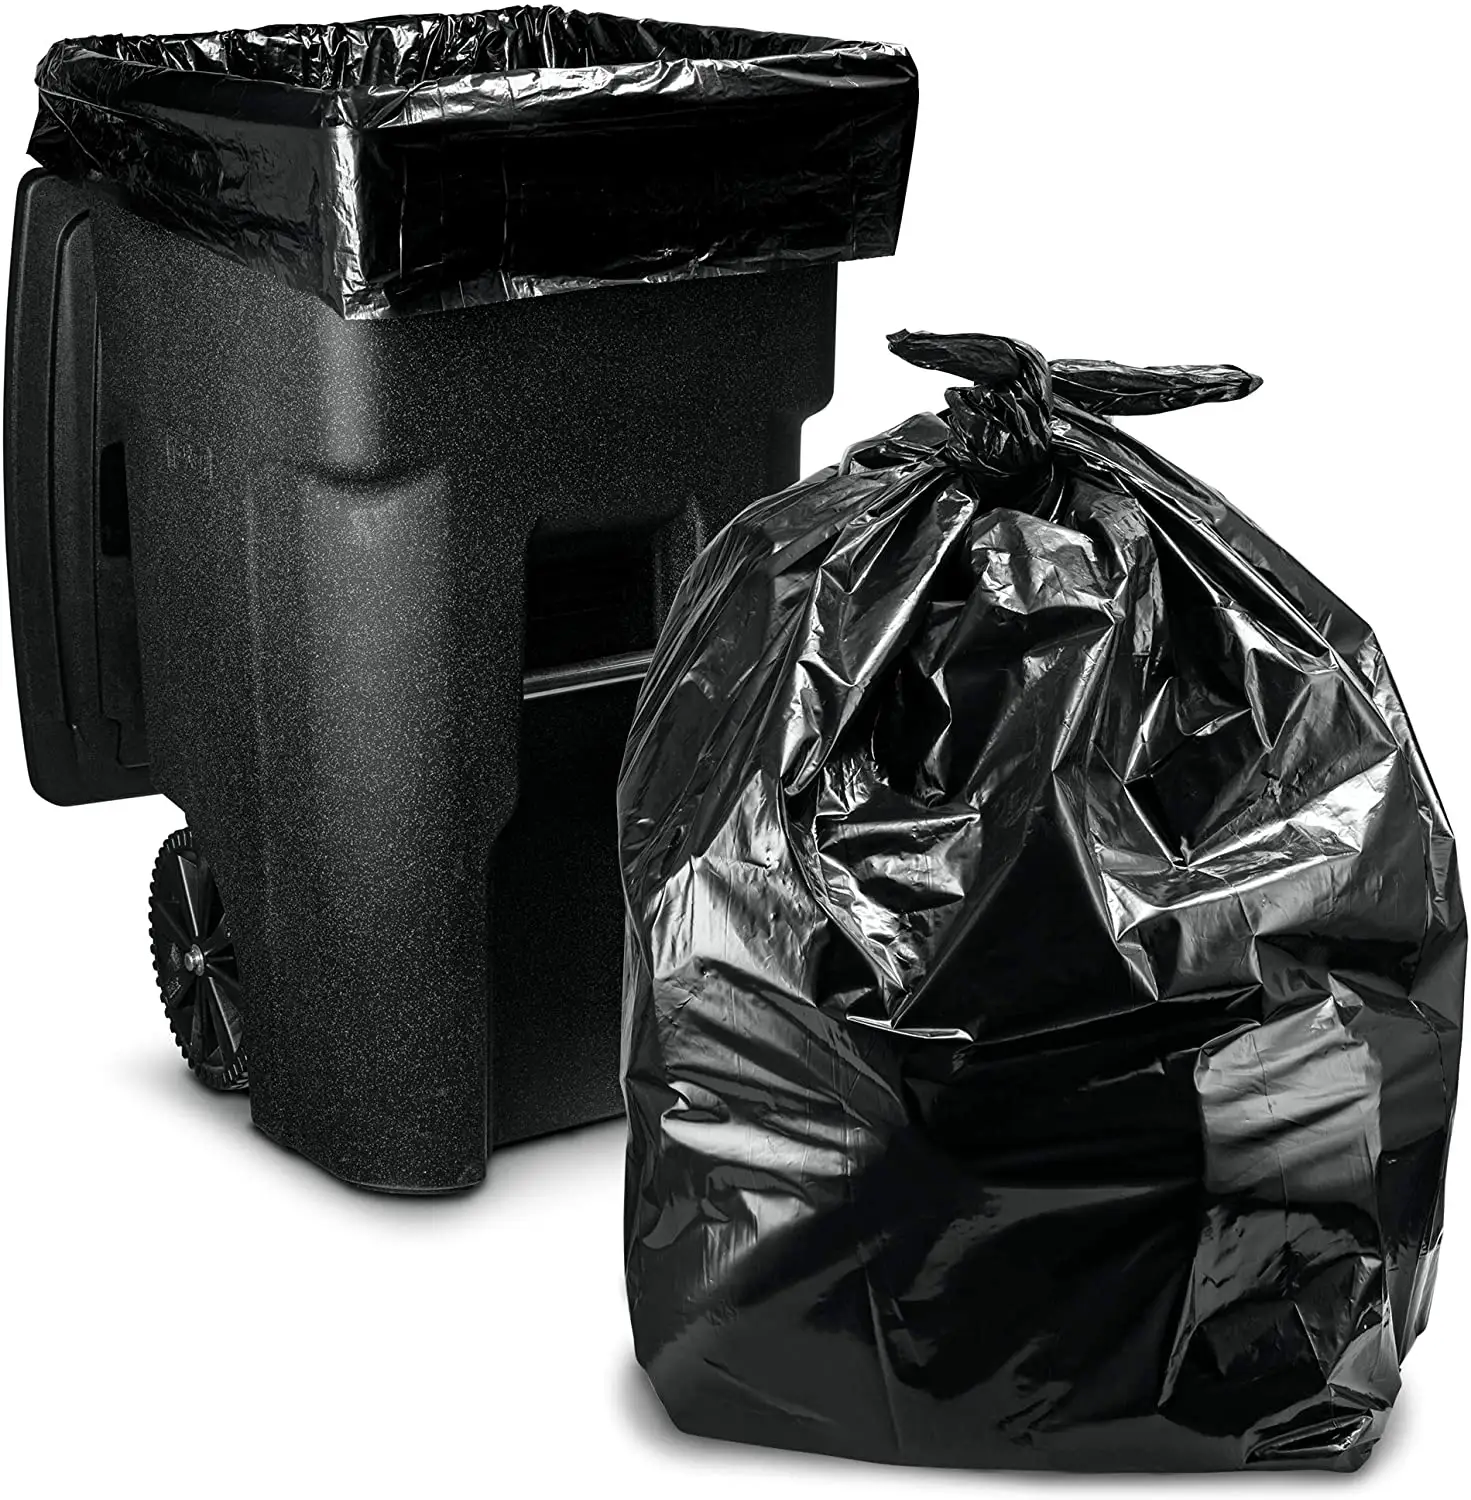 Fábrica personalización bolsa negra de basura grande pesado deber de bolsas de plástico bolsas de basura